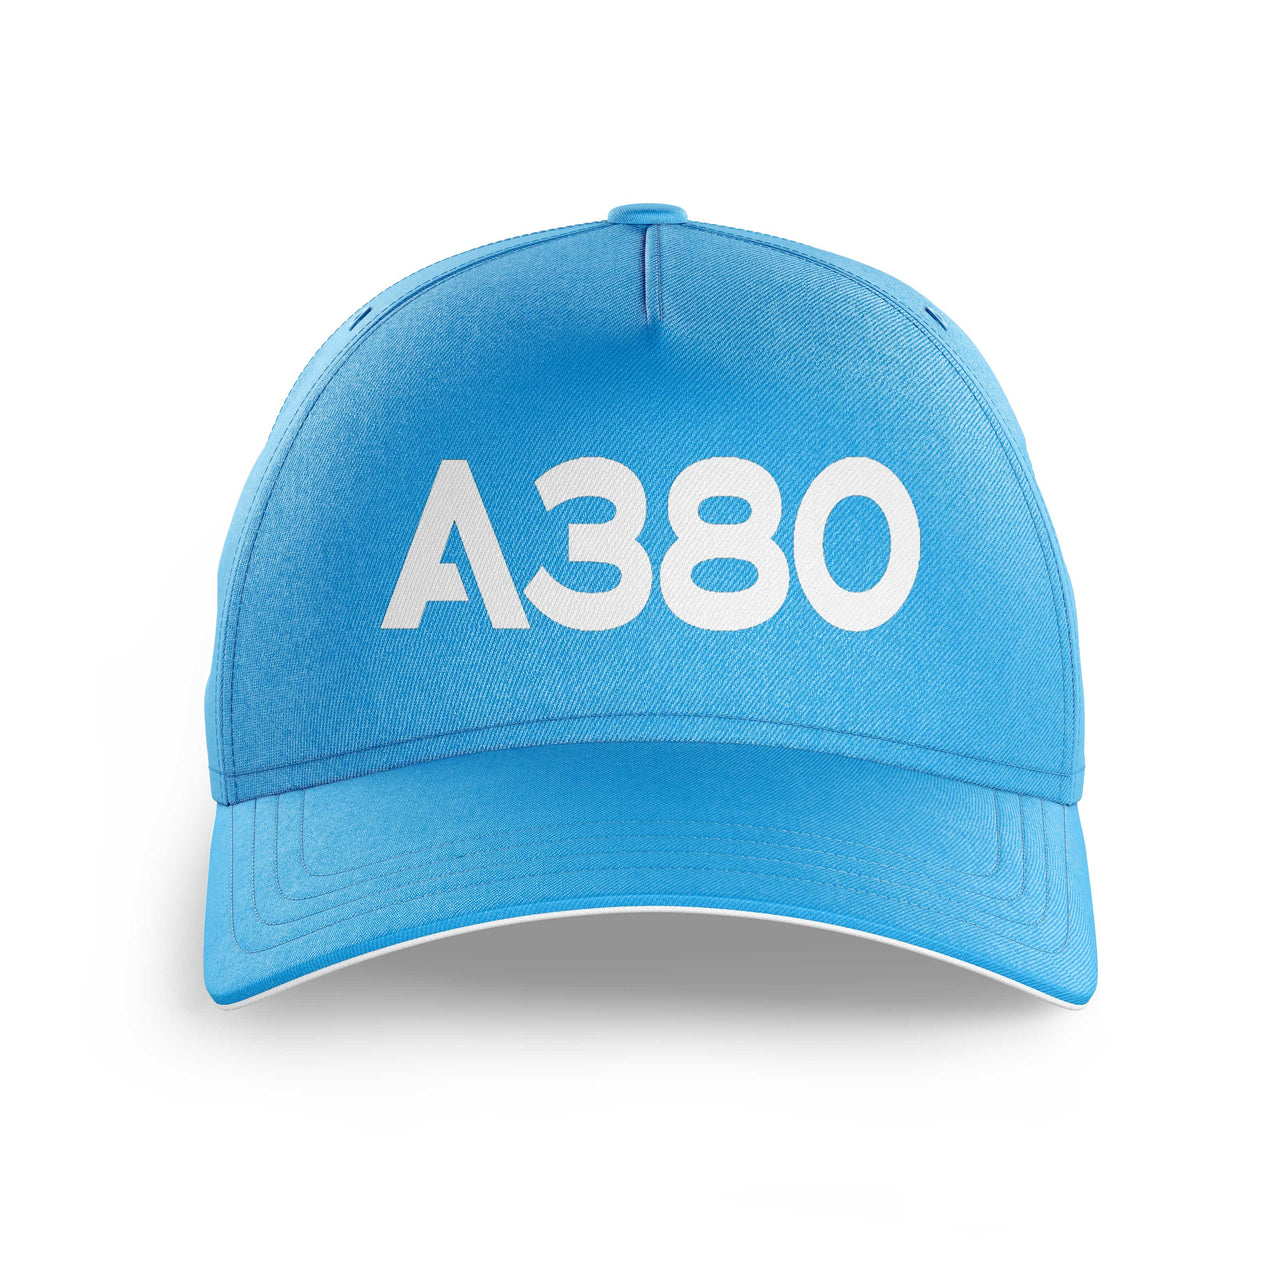 A380 Flat Text Printed Hats